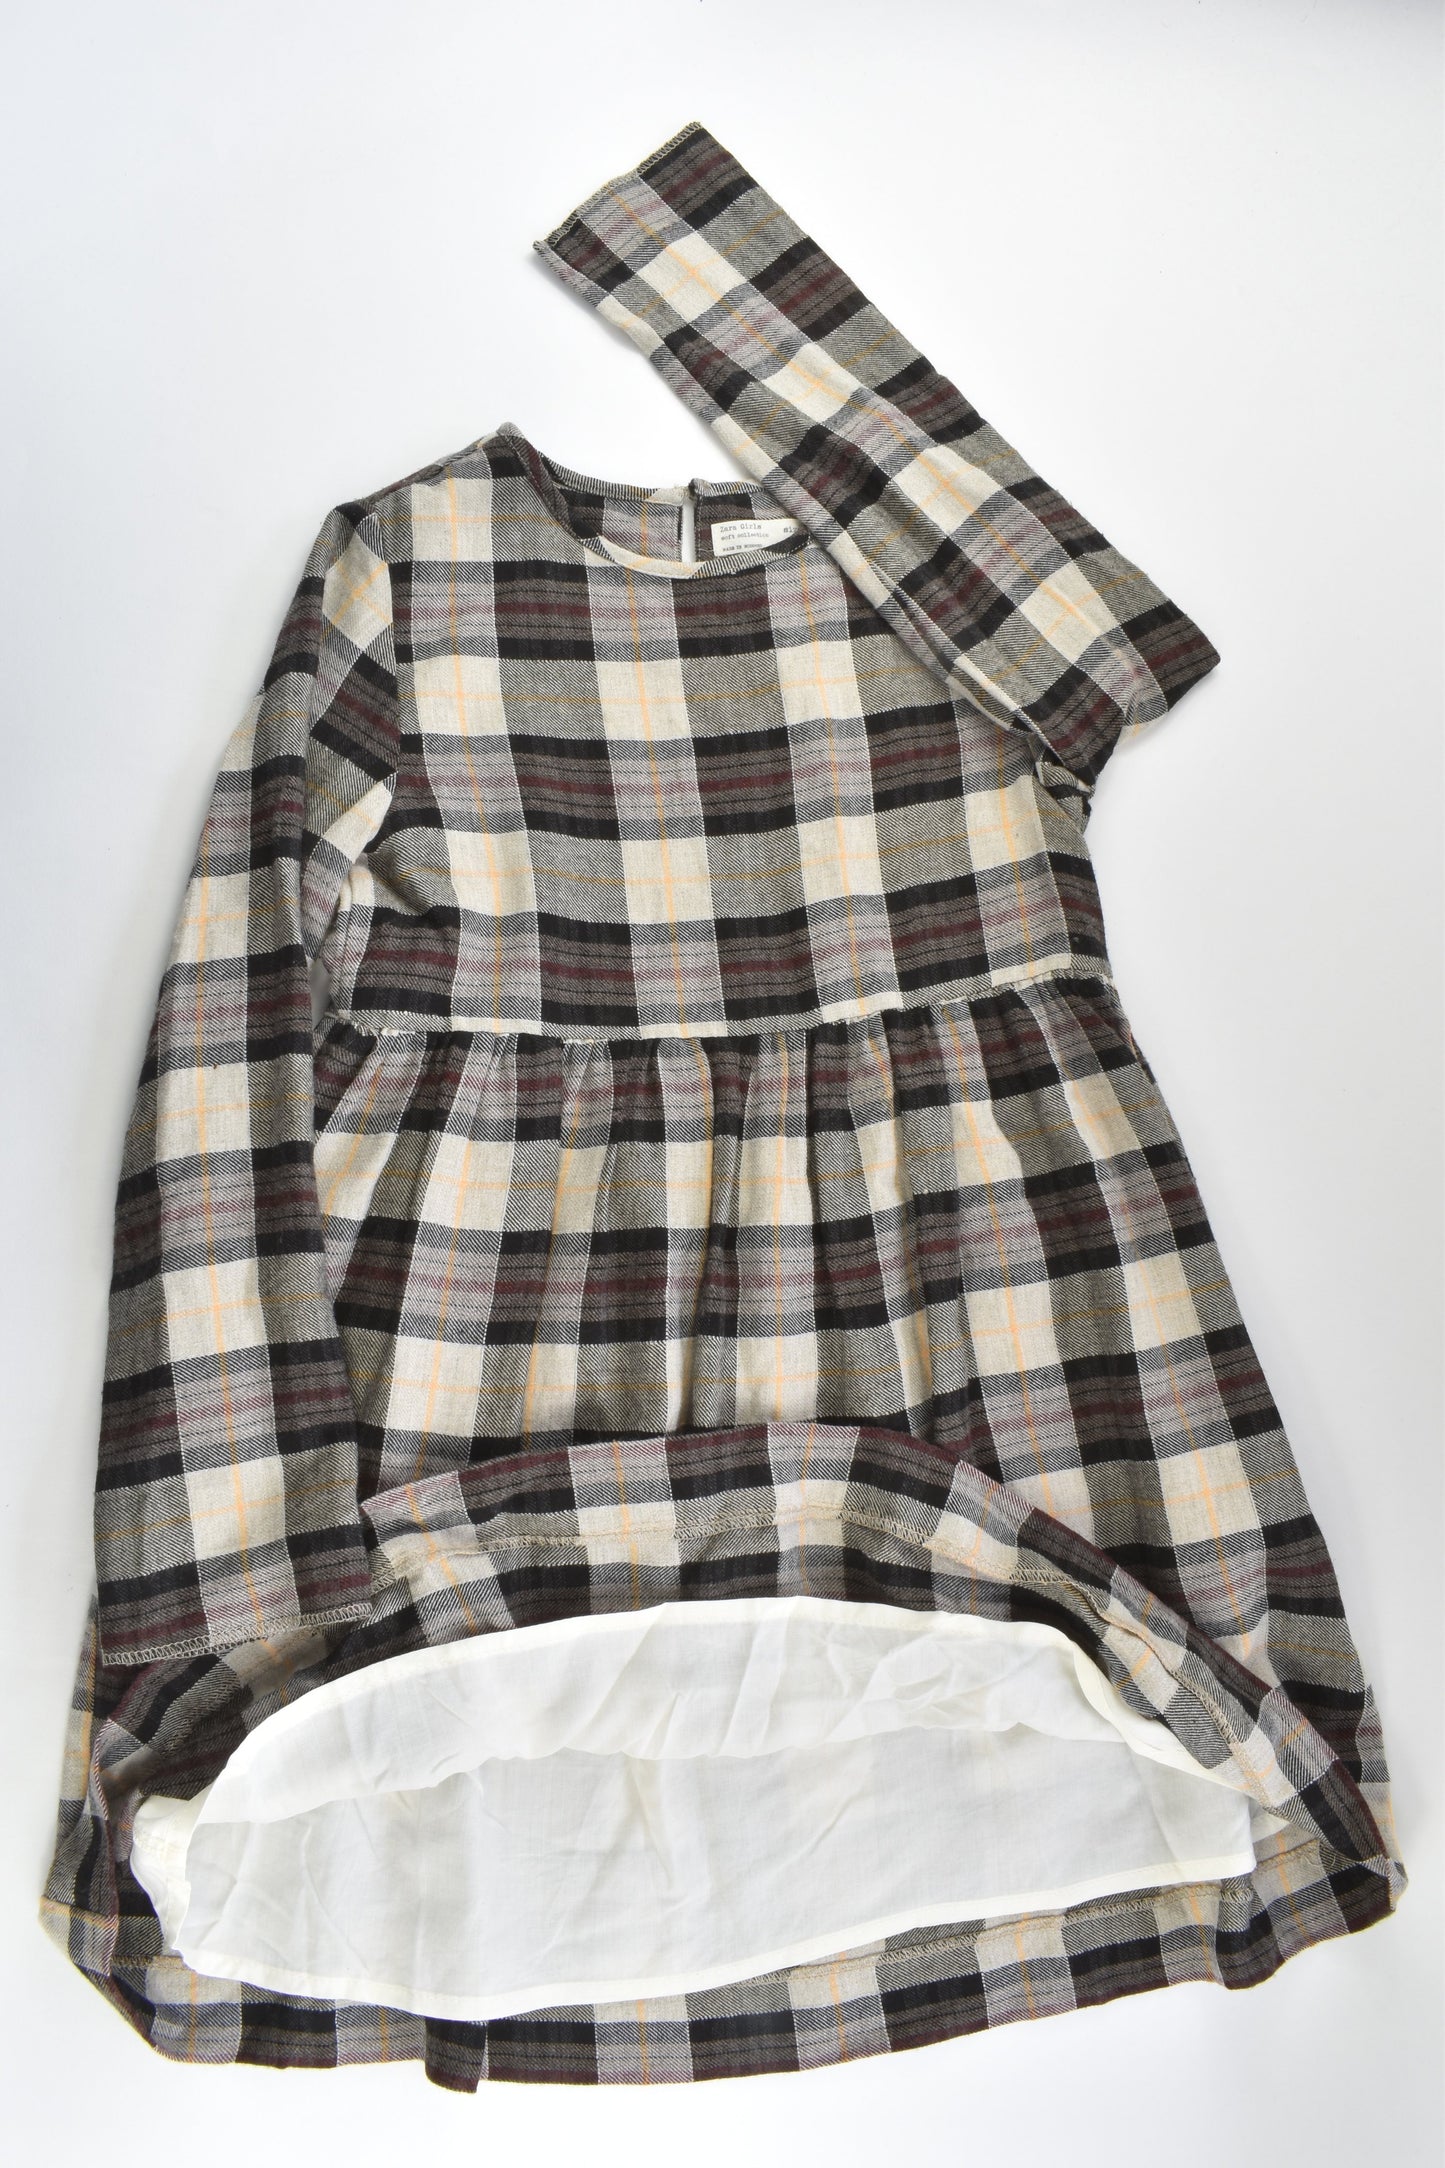 Zara Size 9/10 (140 cm) Checked Lined Winter Dress